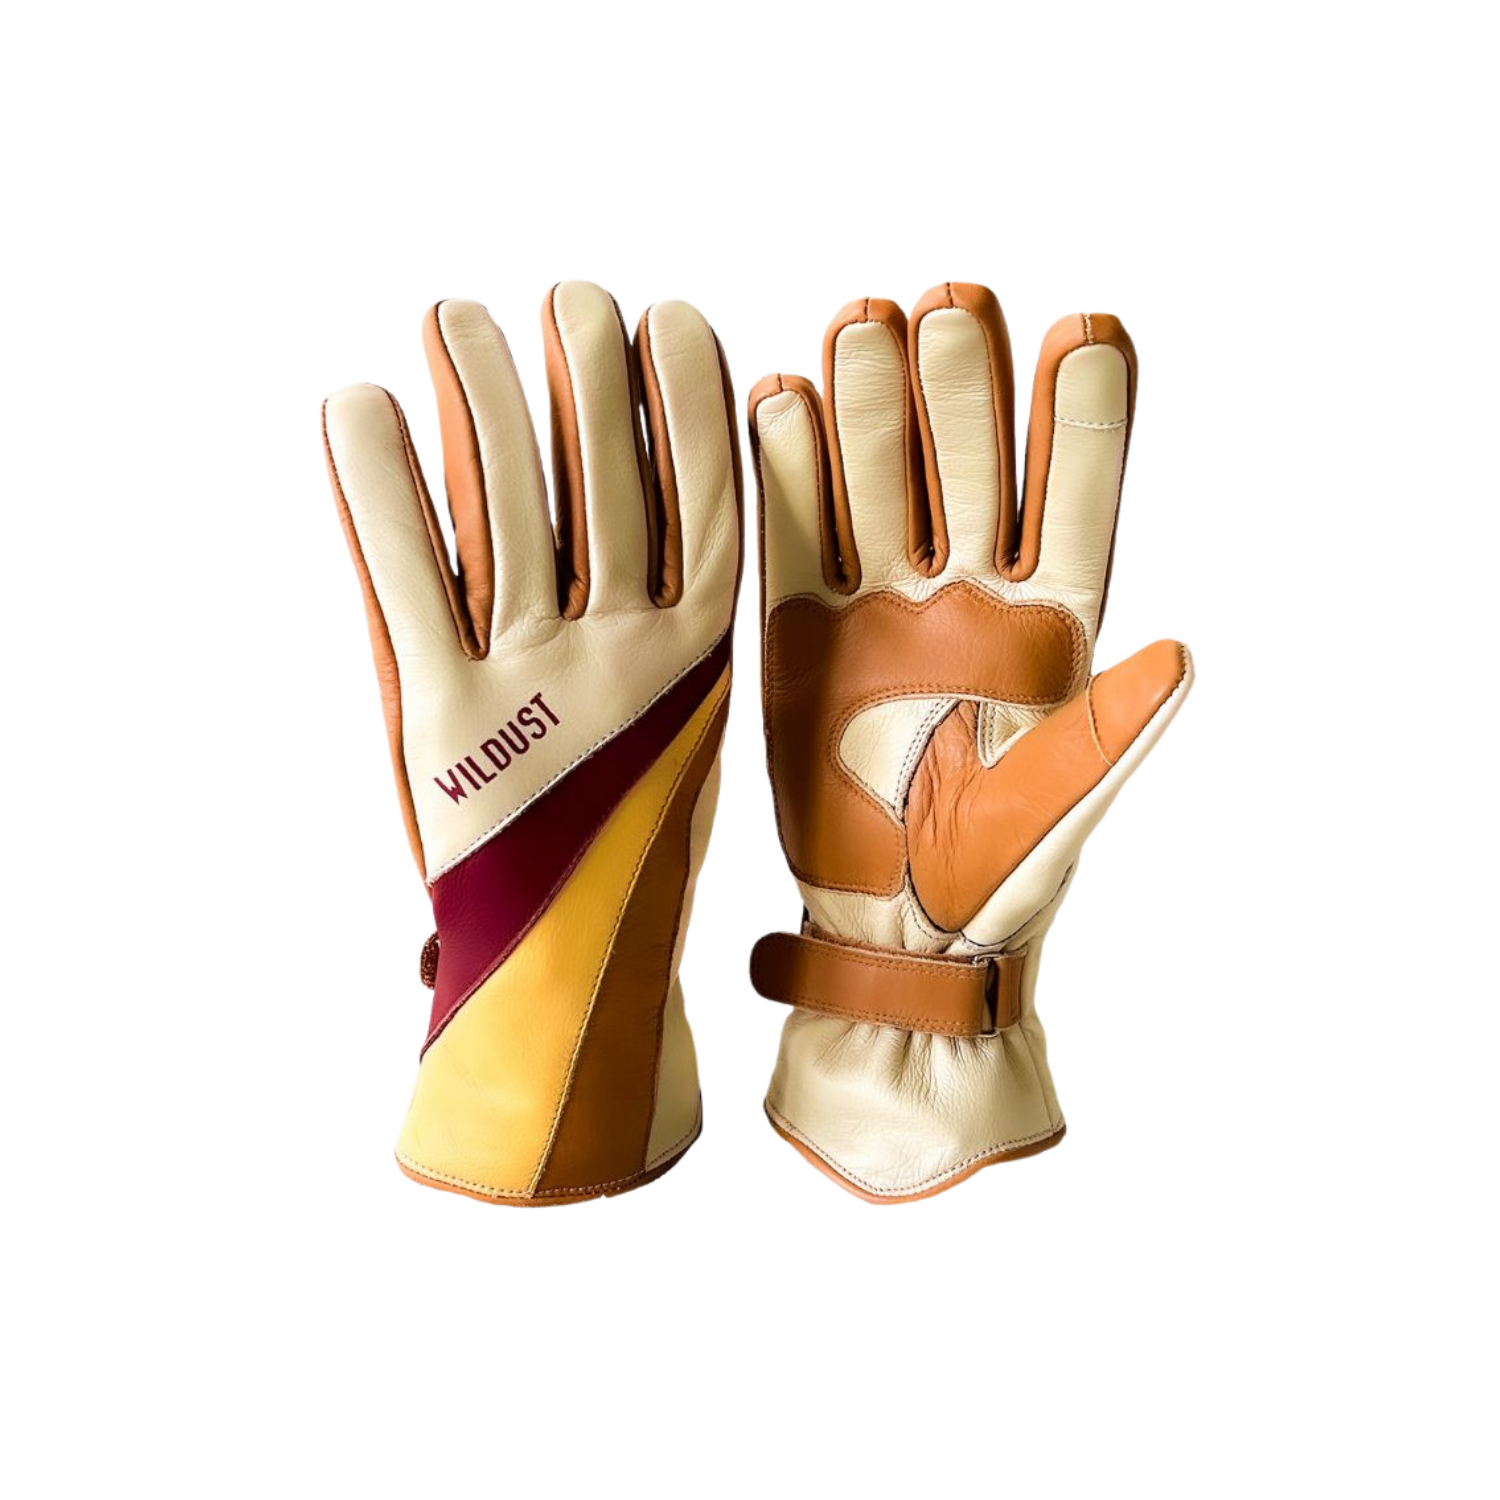 wildust colouful women's leather gloves